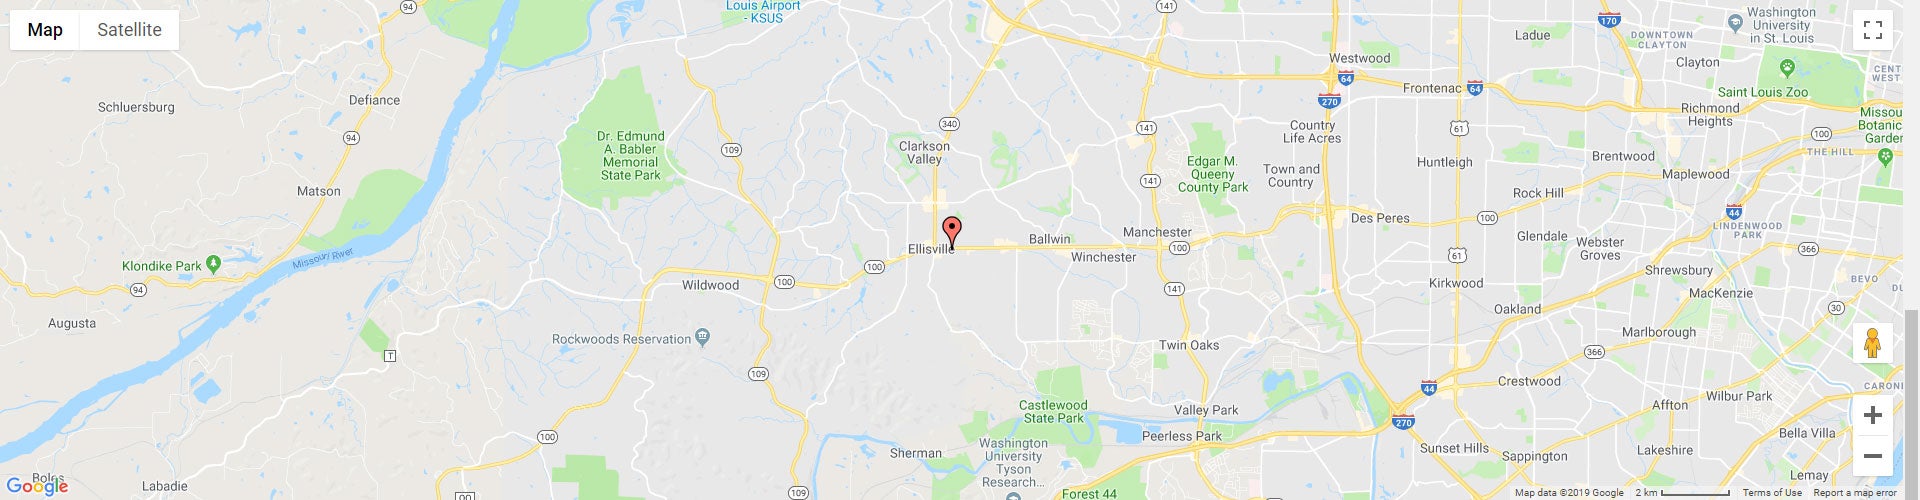 Bommarito West County Google maps